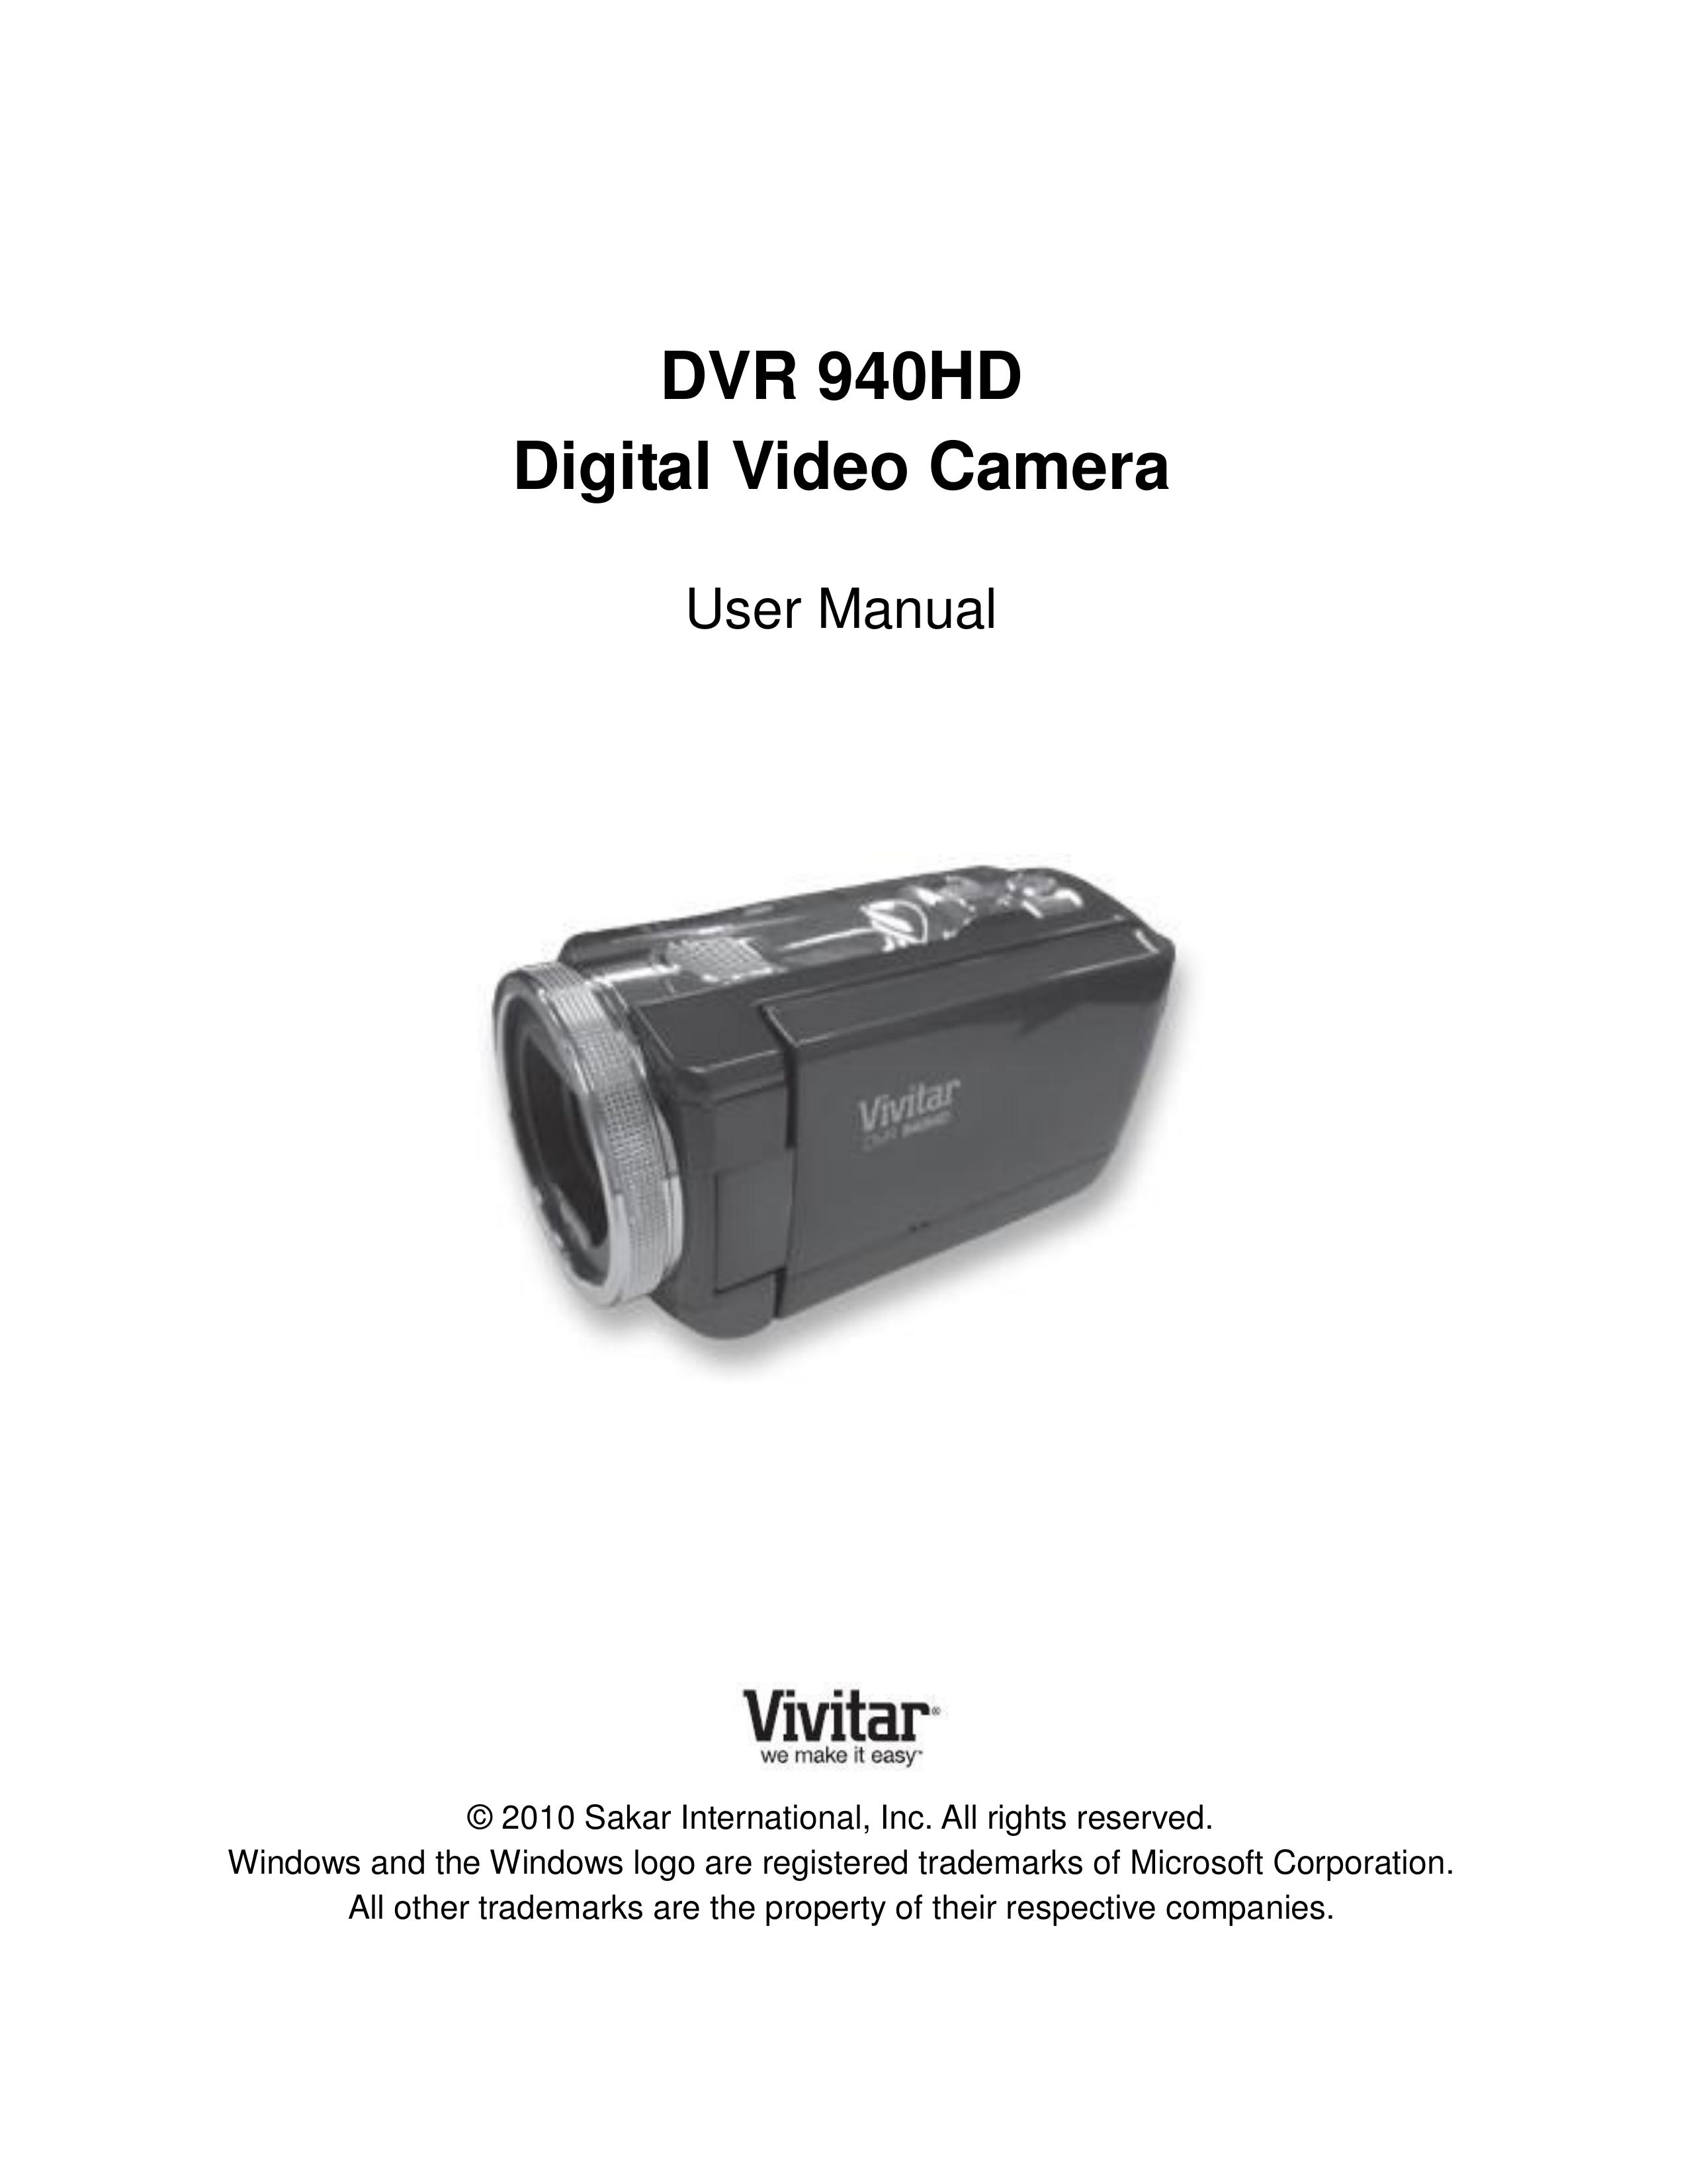 Vivitar DVR940HXD-BLK Camcorder User Manual